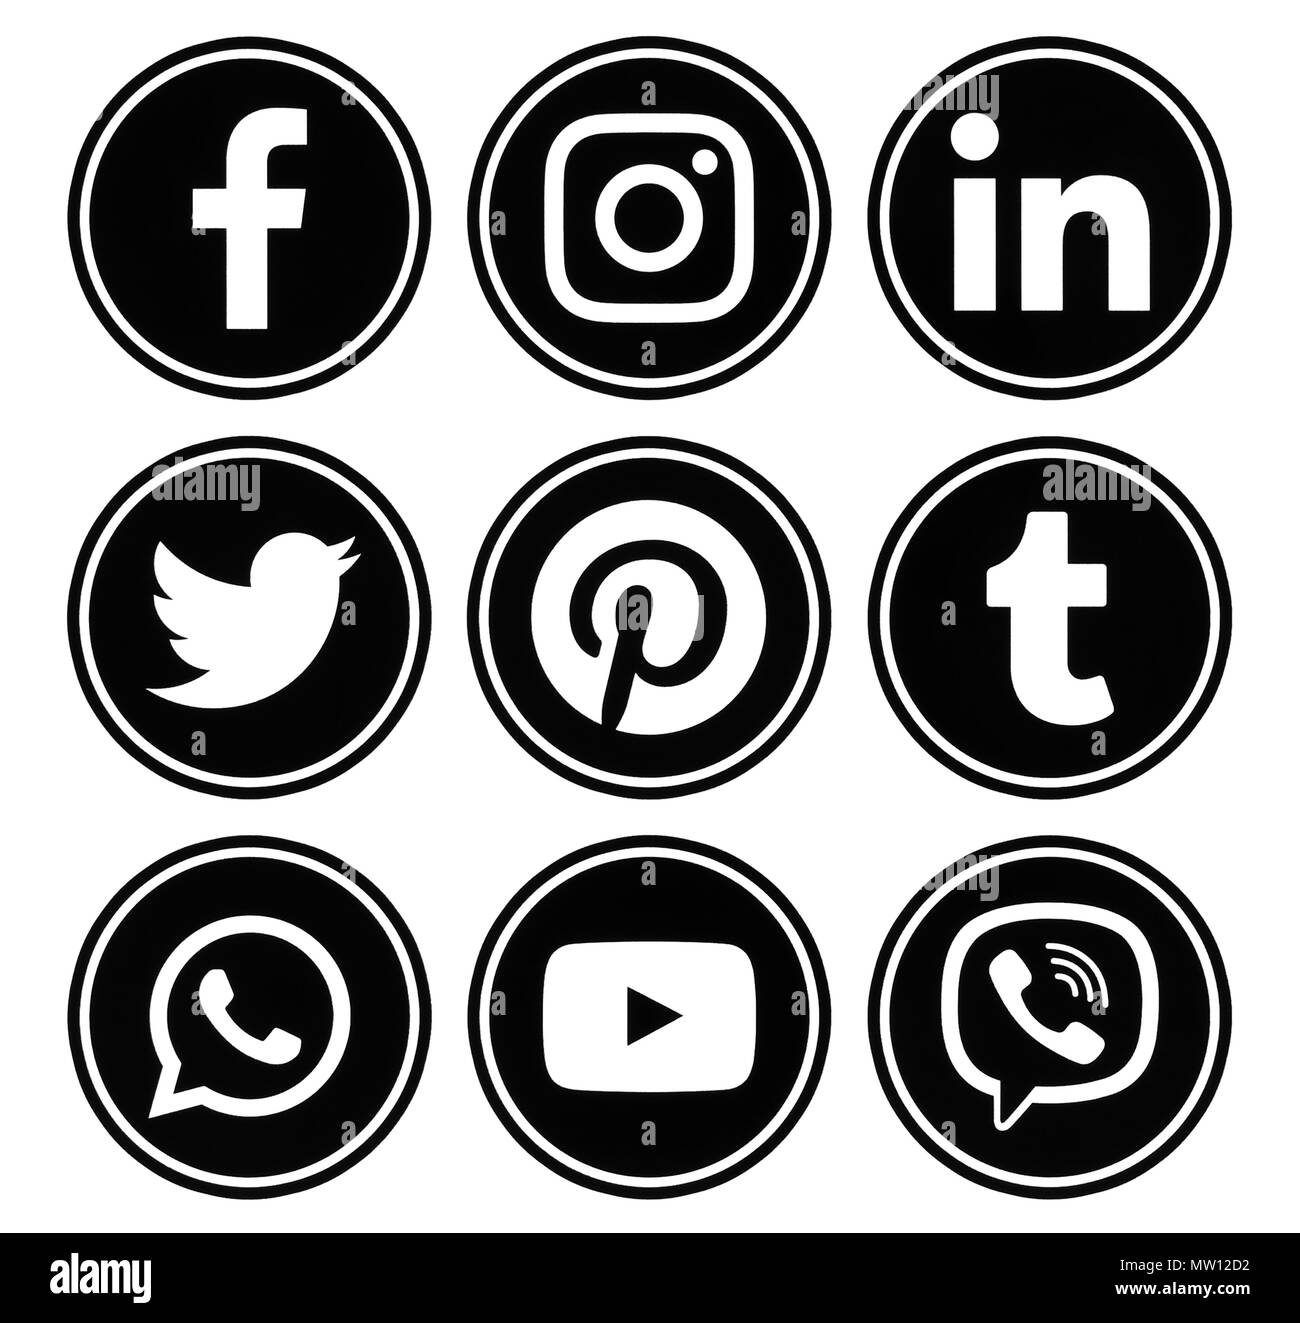 Kiev, Ukraine - December 08, 2017: Popular circle social media black logos with rim printed on paper: Facebook, Twitter, Instagram, Pinterest, LinkedI Stock Photo